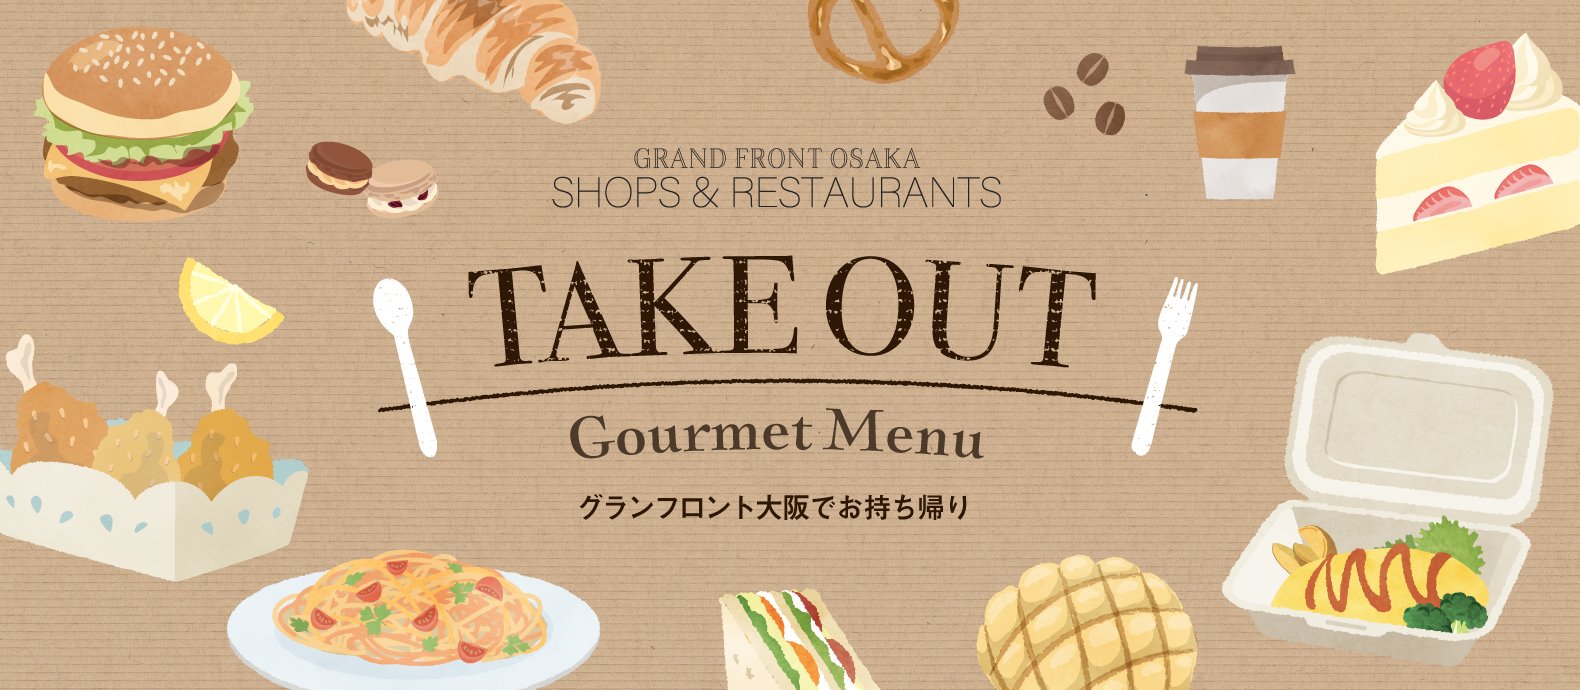 Takeout Gourmet Menu Grand Front Osaka Shops Restaurants